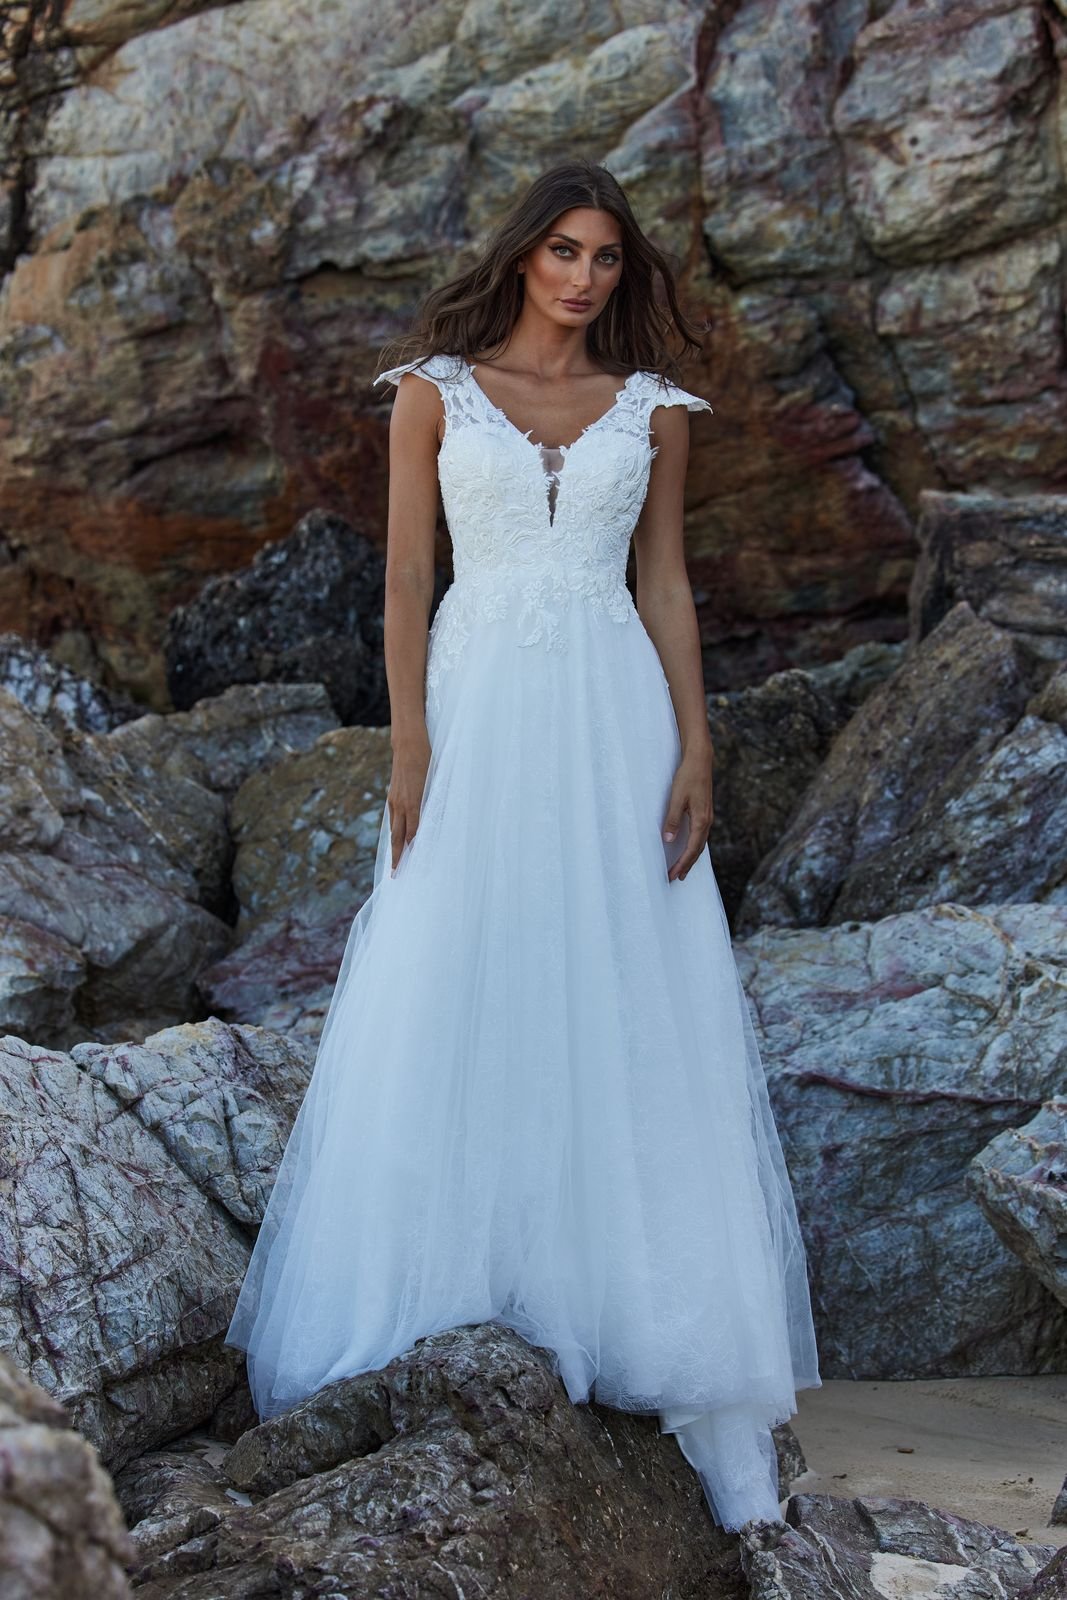 Wedding Dresses for all sizes 8-30 — Bridal